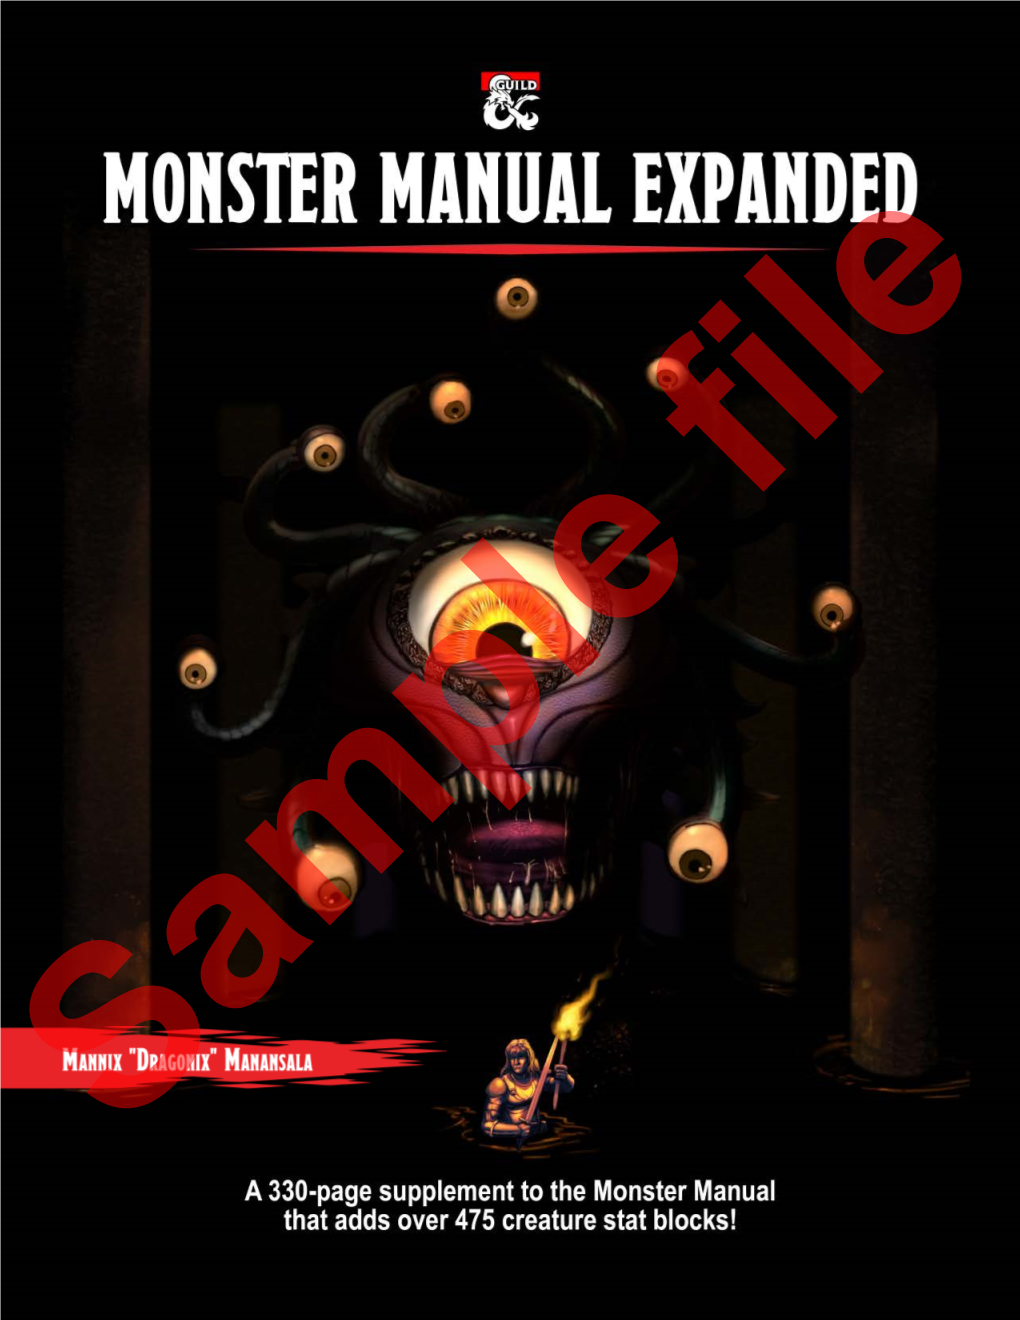 Praise for Monster Manual Expanded